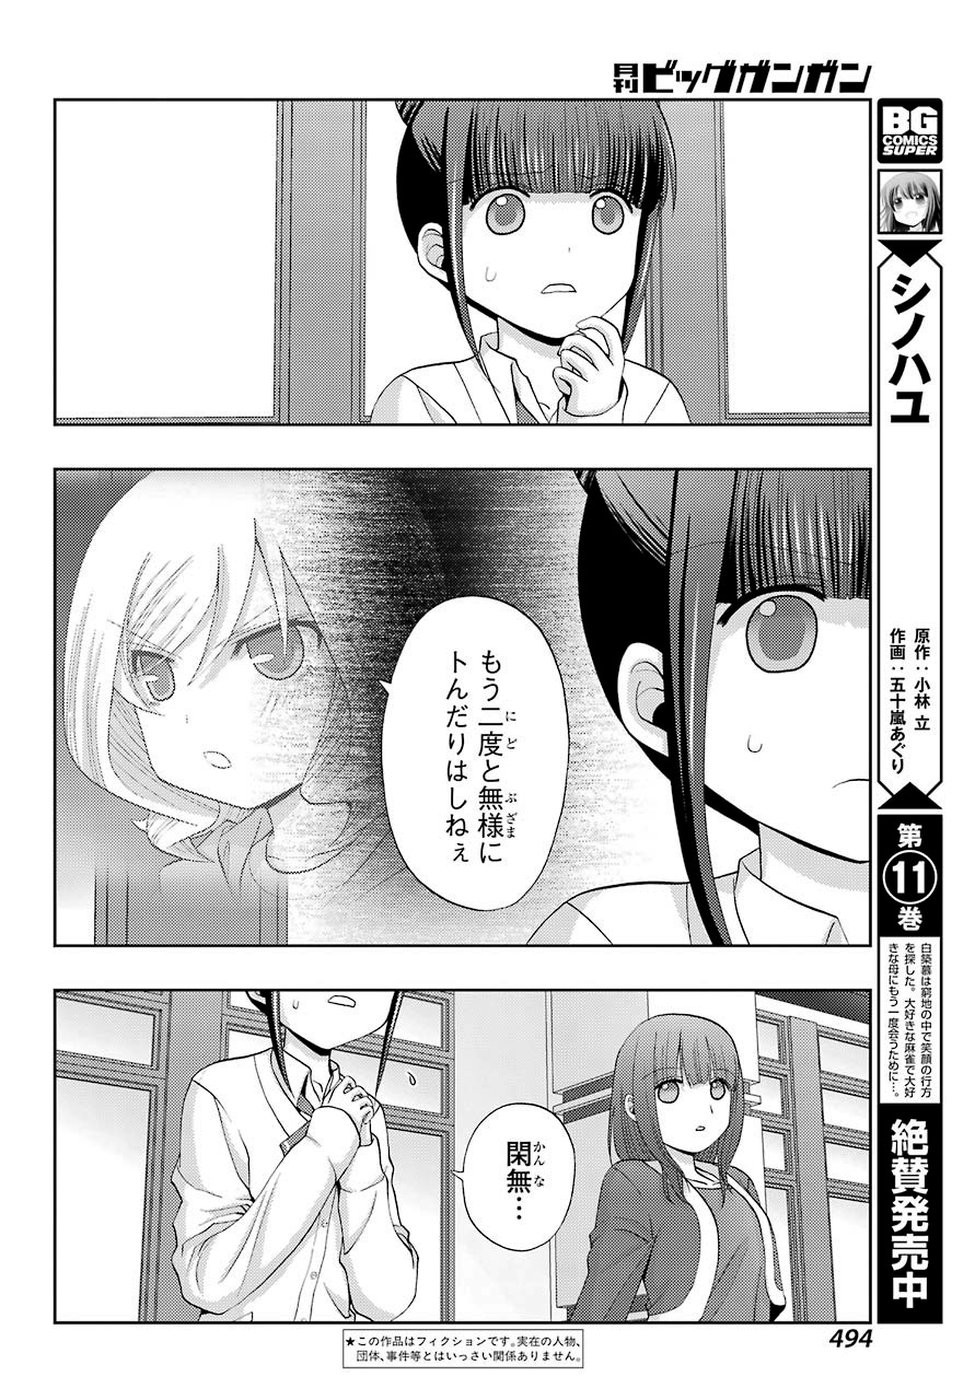 Shinohayu - The Dawn of Age Manga - Chapter 070 - Page 3